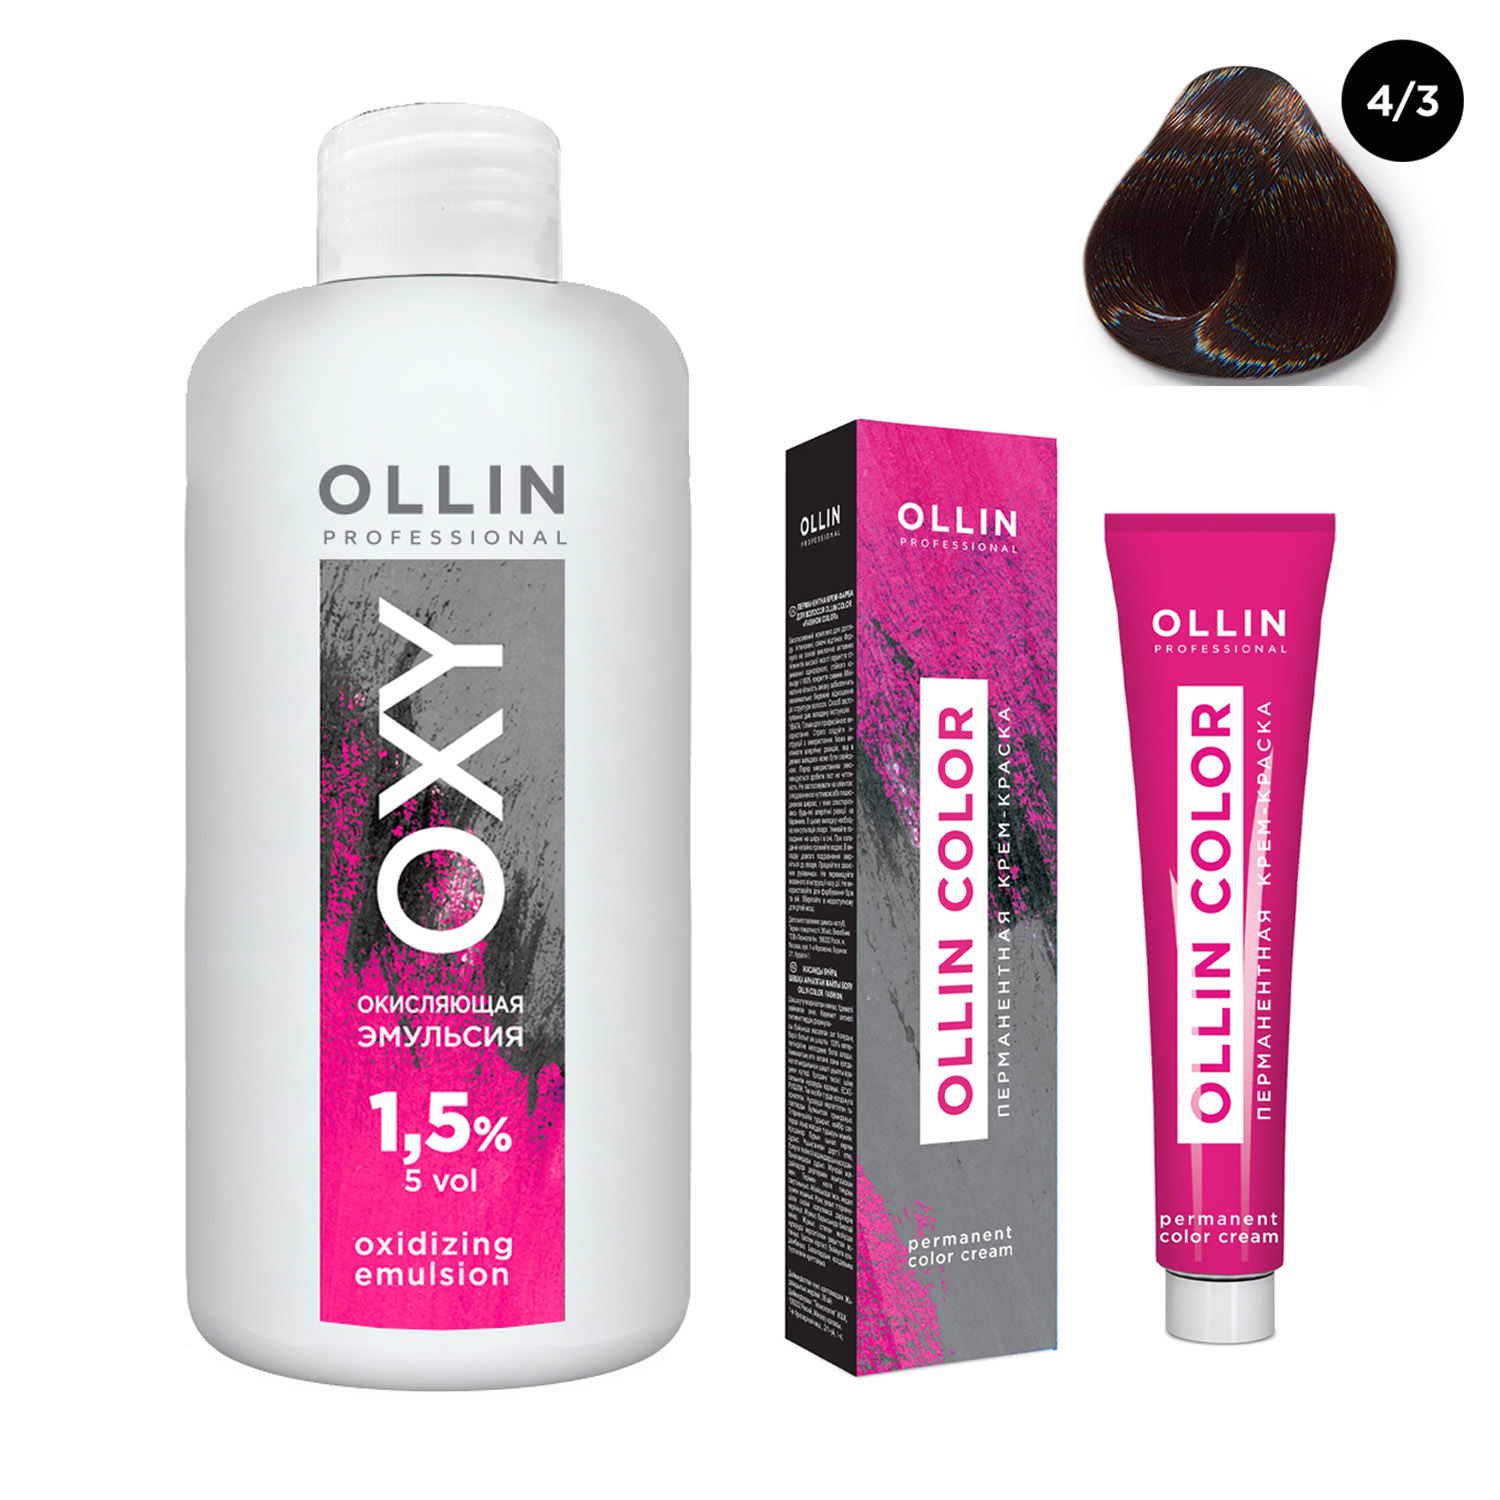 Ollin Professional Набор Перманентная крем-краска для волос Ollin Color оттенок 4/3 шатен золотистый 100 мл + Окисляющая эмульсия Oxy 1,5% 150 мл (Ollin Professional, Ollin Color) цена и фото